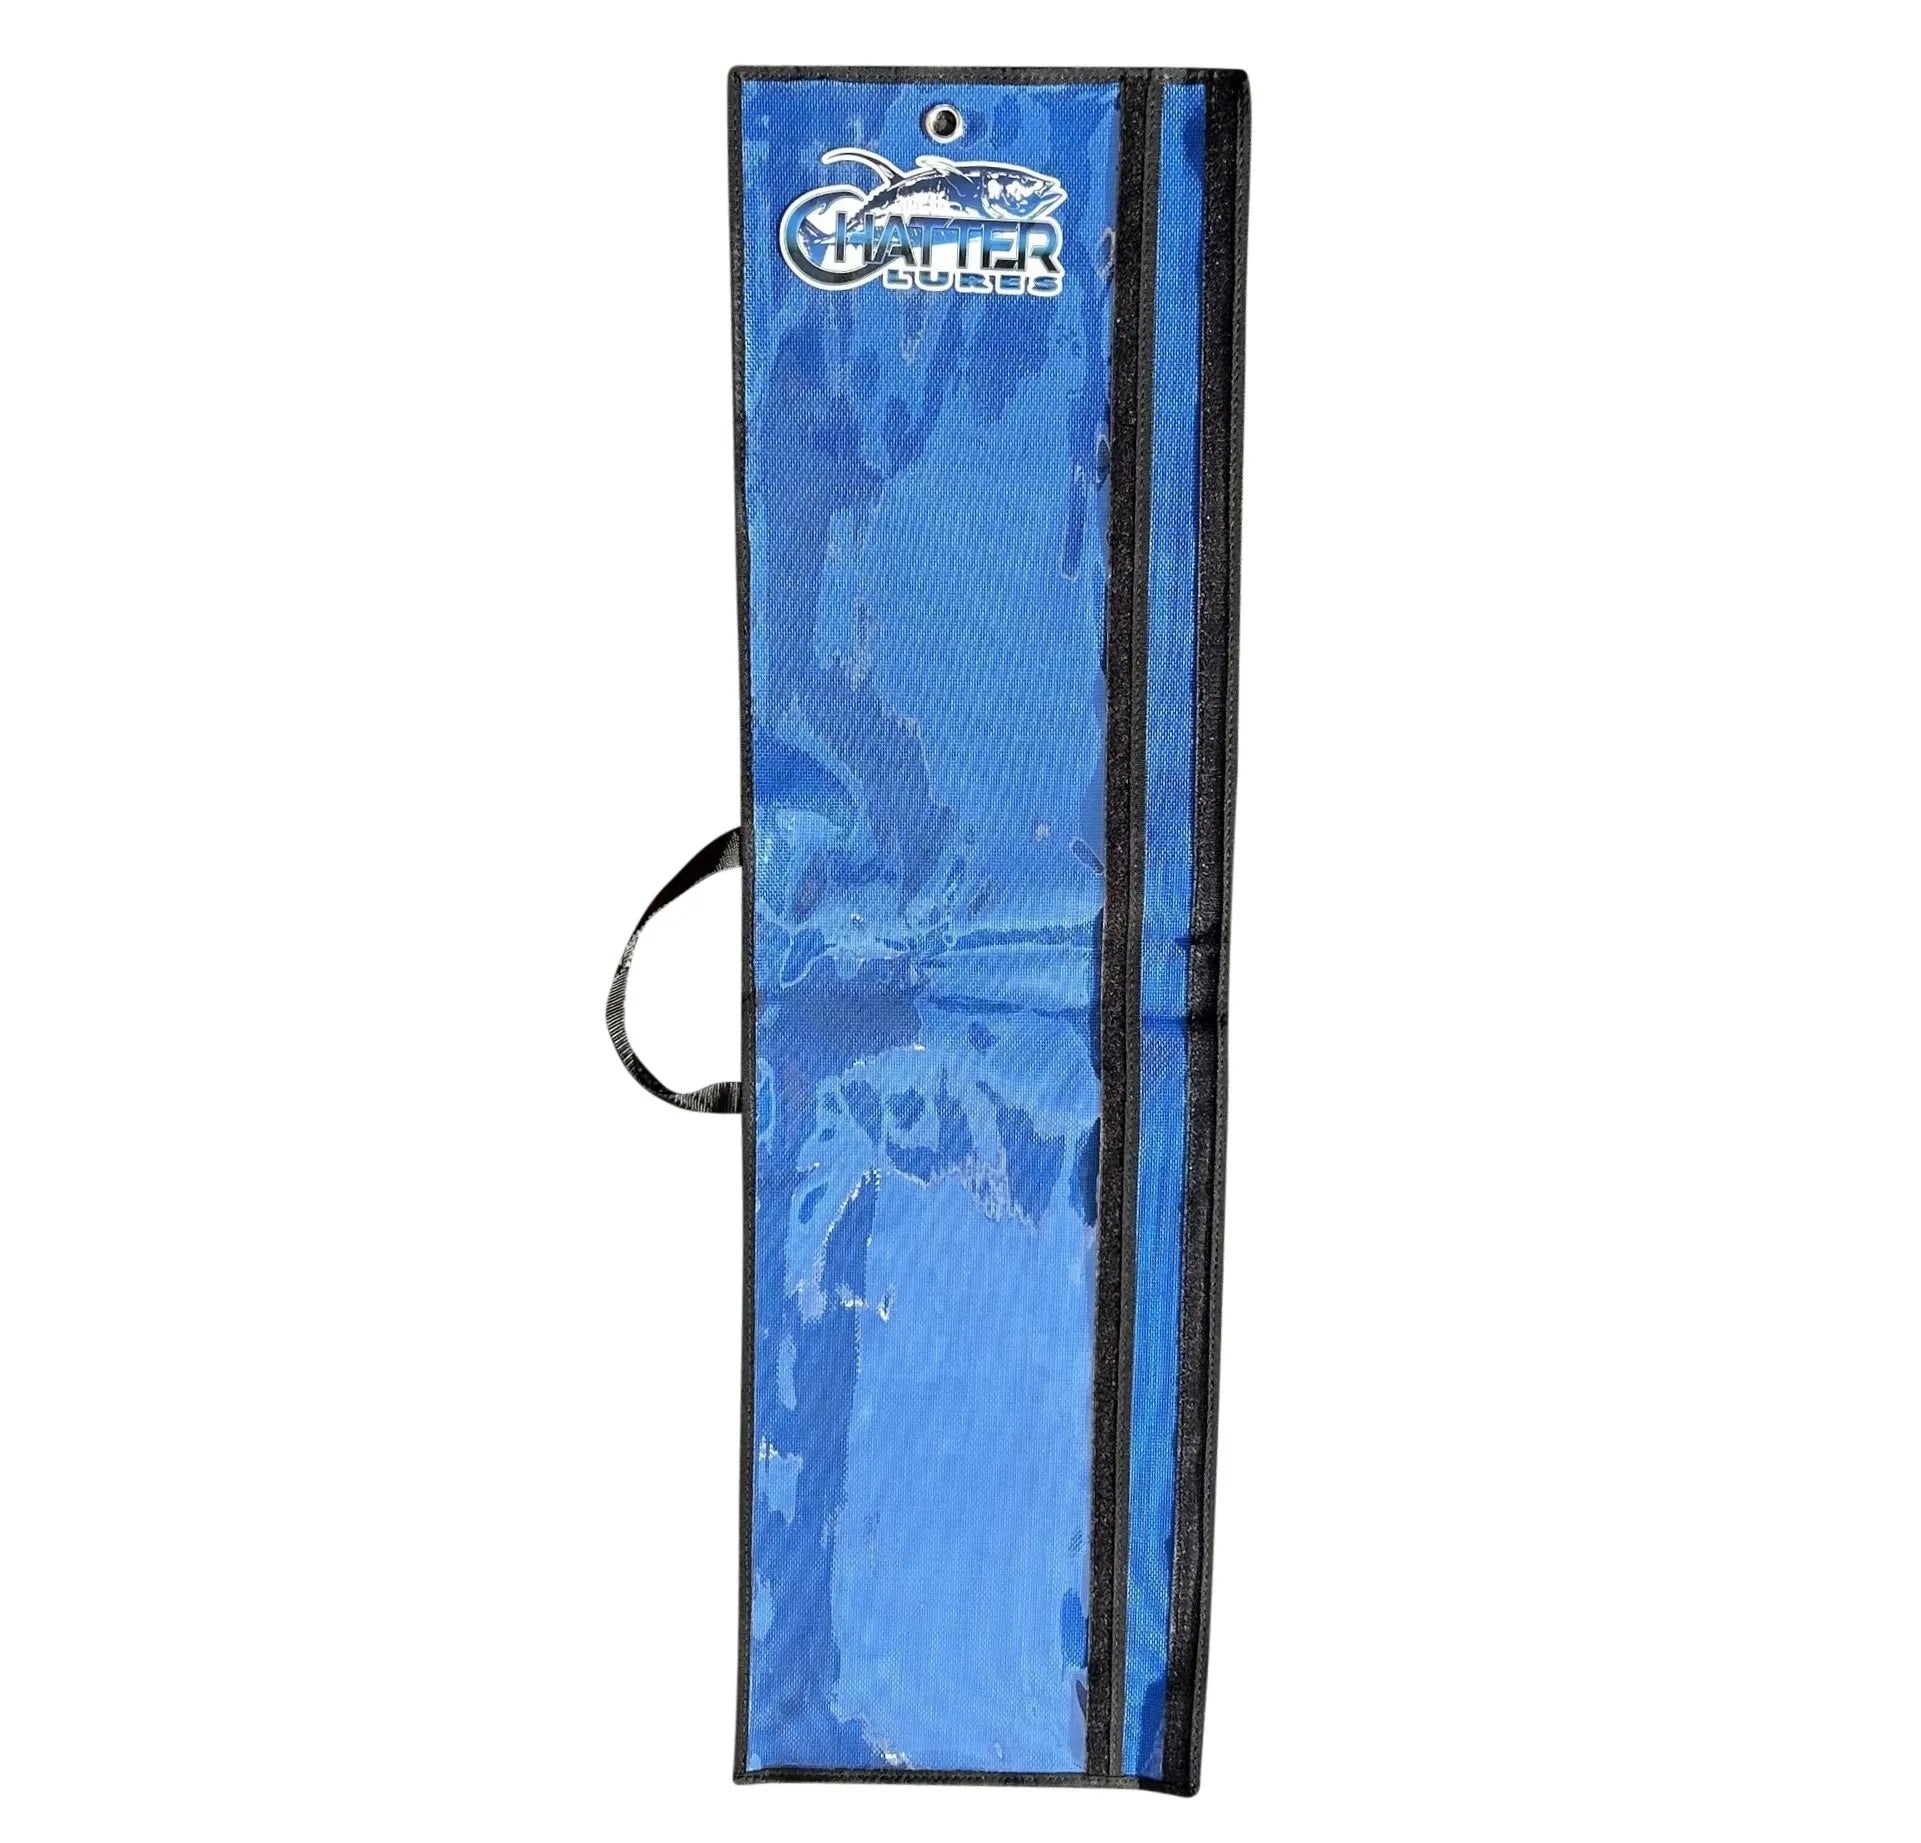 ChatterLures - Standard Spreader Bar Bags